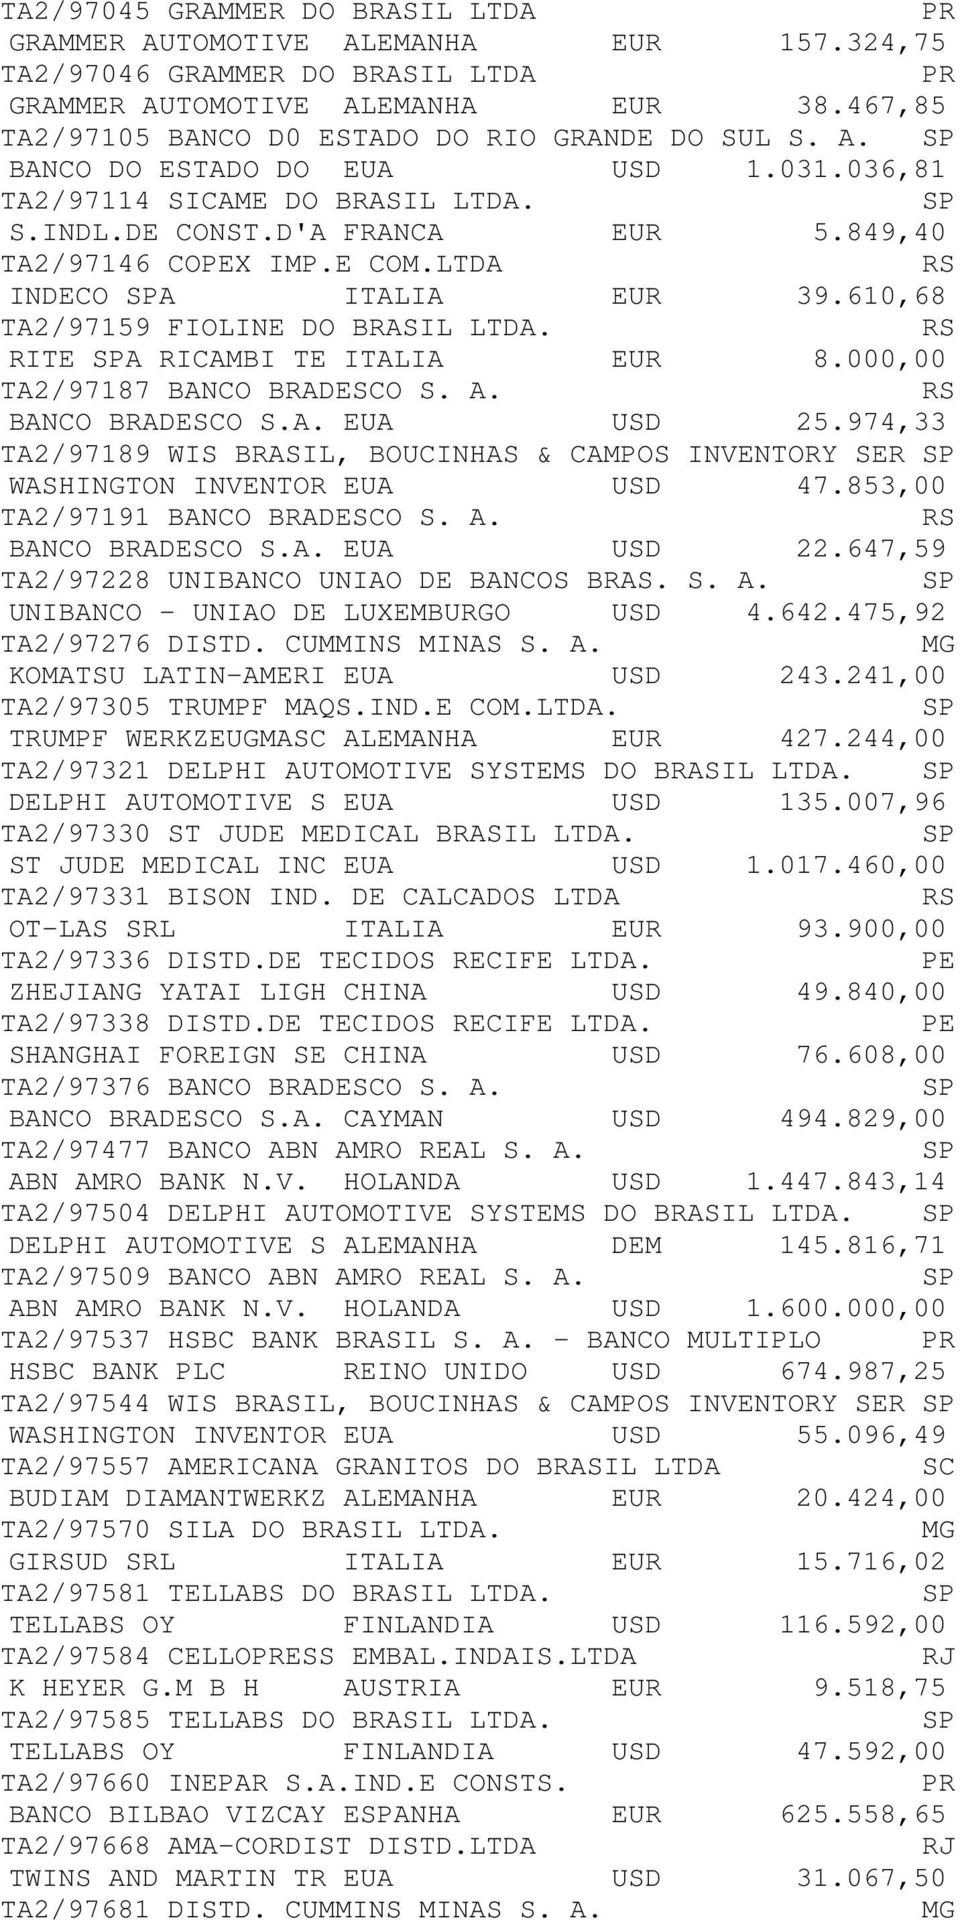 RITE A RICBI TE ITALIA EUR 8.000,00 TA2/97187 BANCO BRADEO S. A. BANCO BRADEO S.A. EUA USD 25.974,33 TA2/97189 WIS BRASIL, BOUCINHAS & CPOS INVENTORY SER WASHINGTON INVENTOR EUA USD 47.